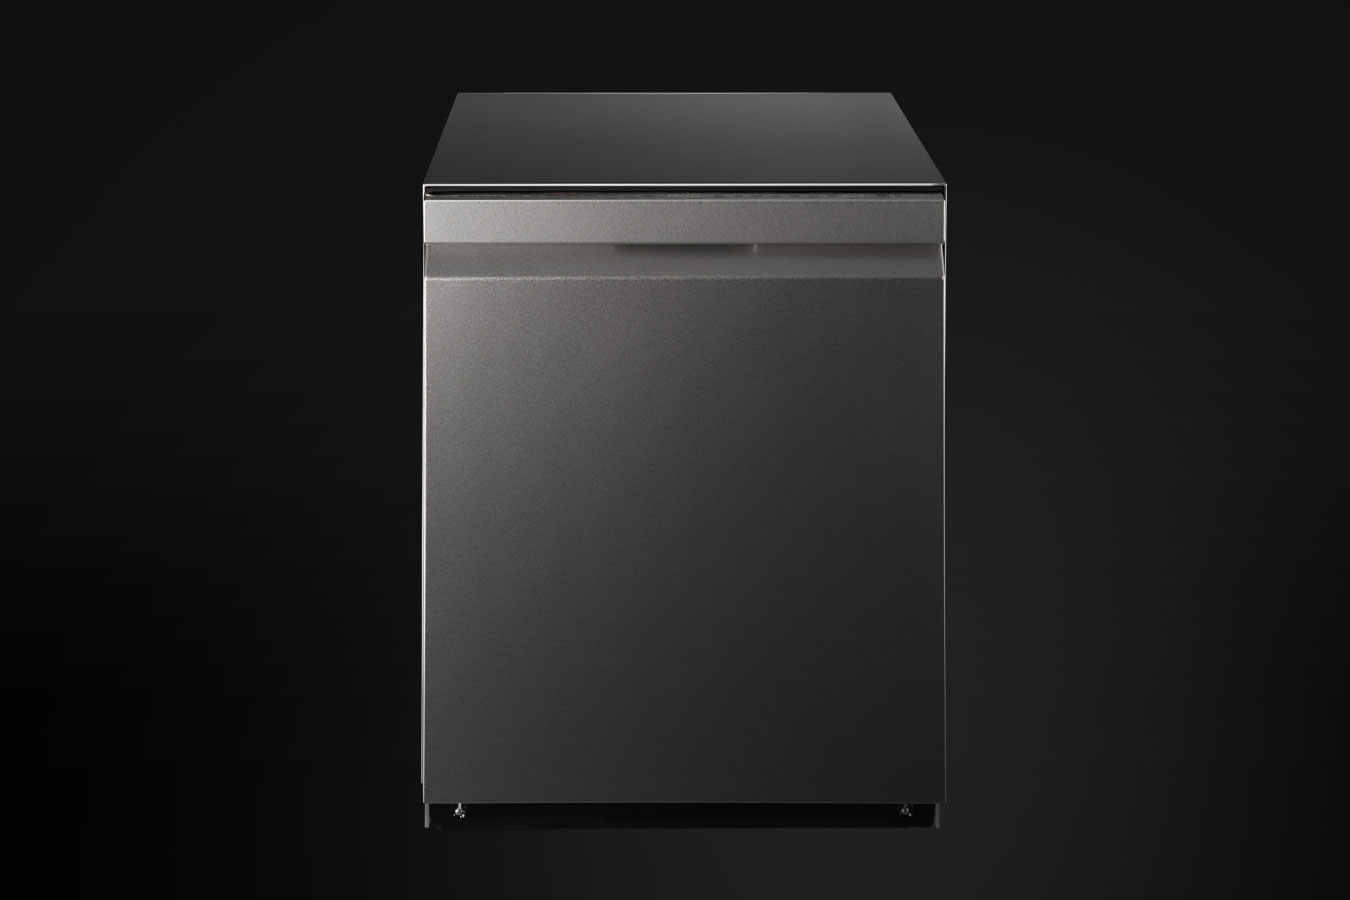 lgs signature line includes auto door fridge washer dryer combo lg dishwasher 3